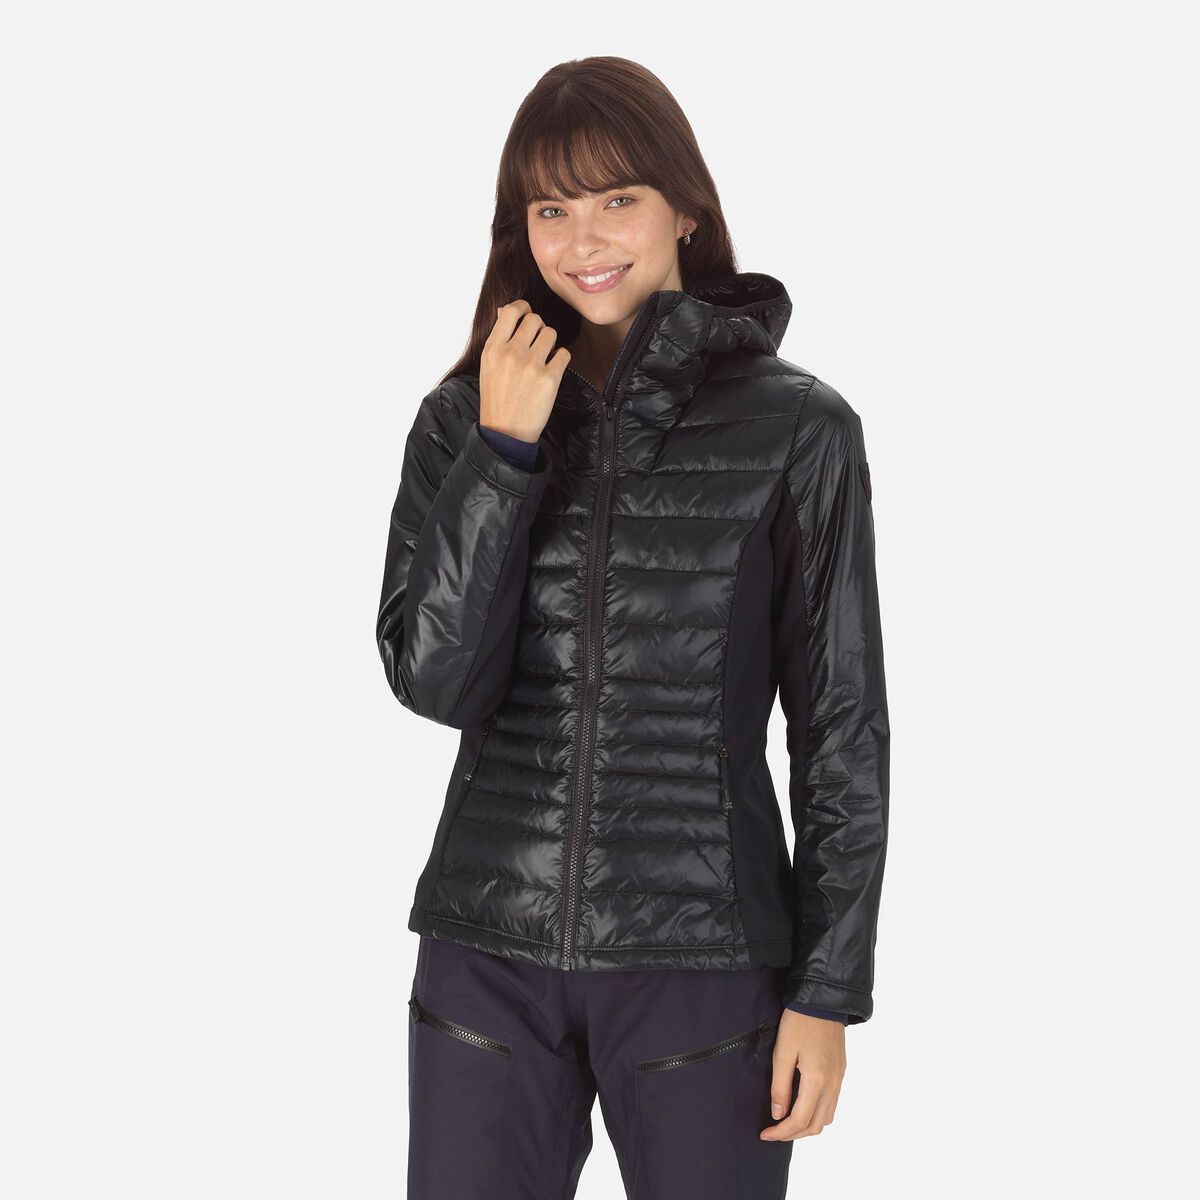 Rossignol Women's SKPR Hybrid Light Jacket Black